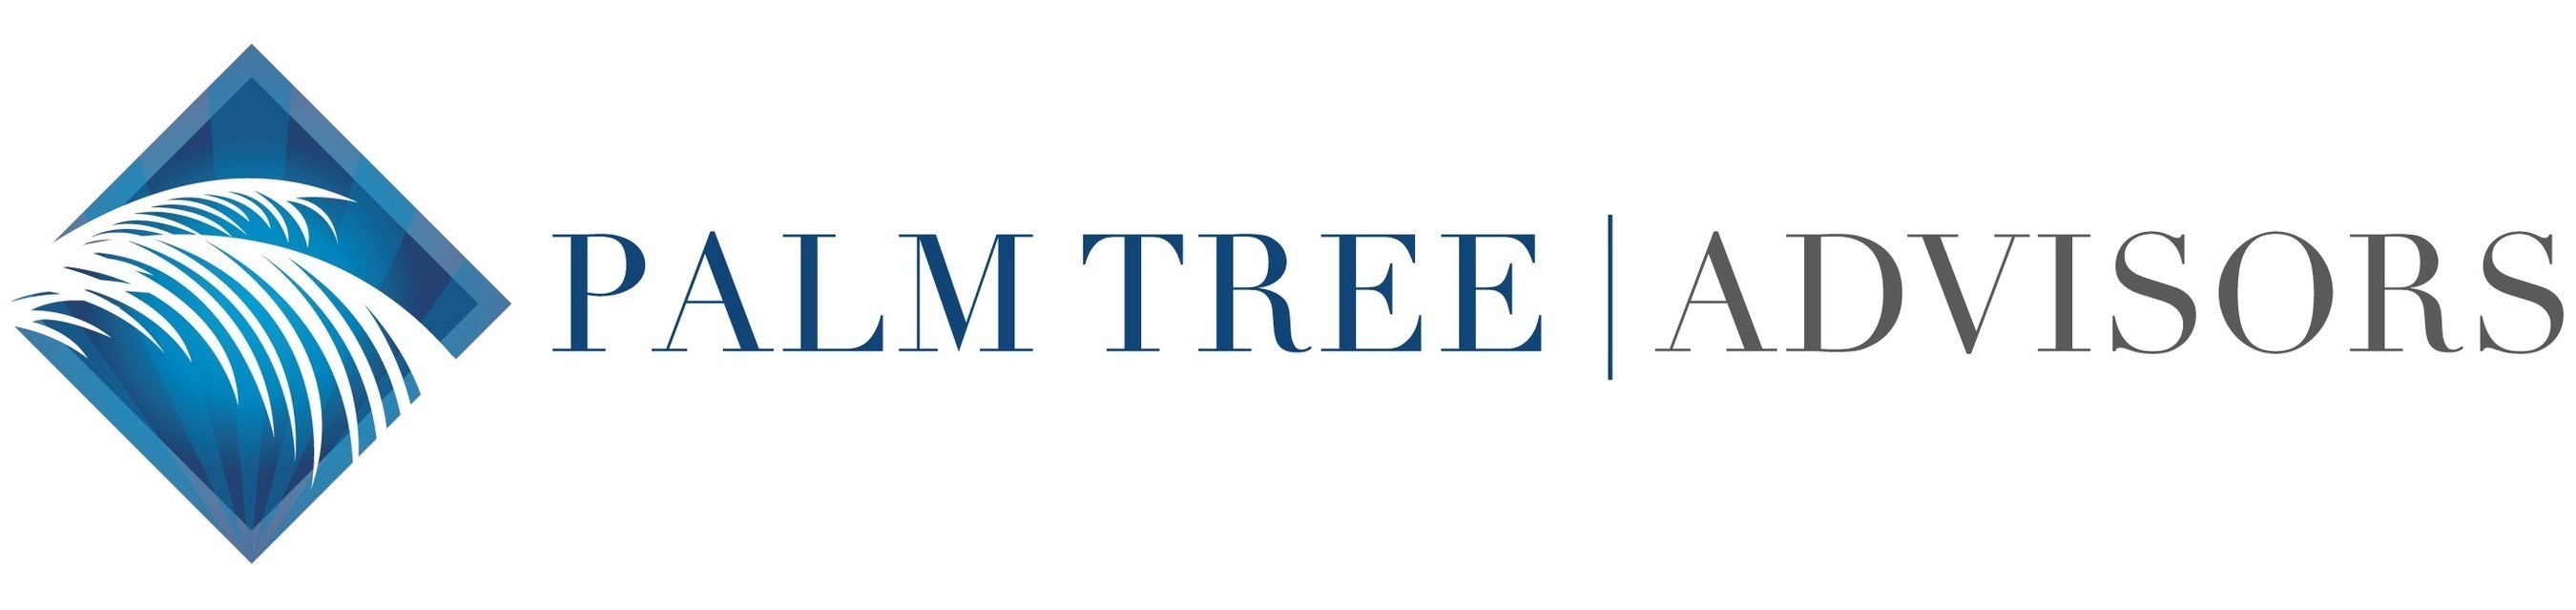 Palm Tree Advisors Announces Recent Human Capital Improvements to ...